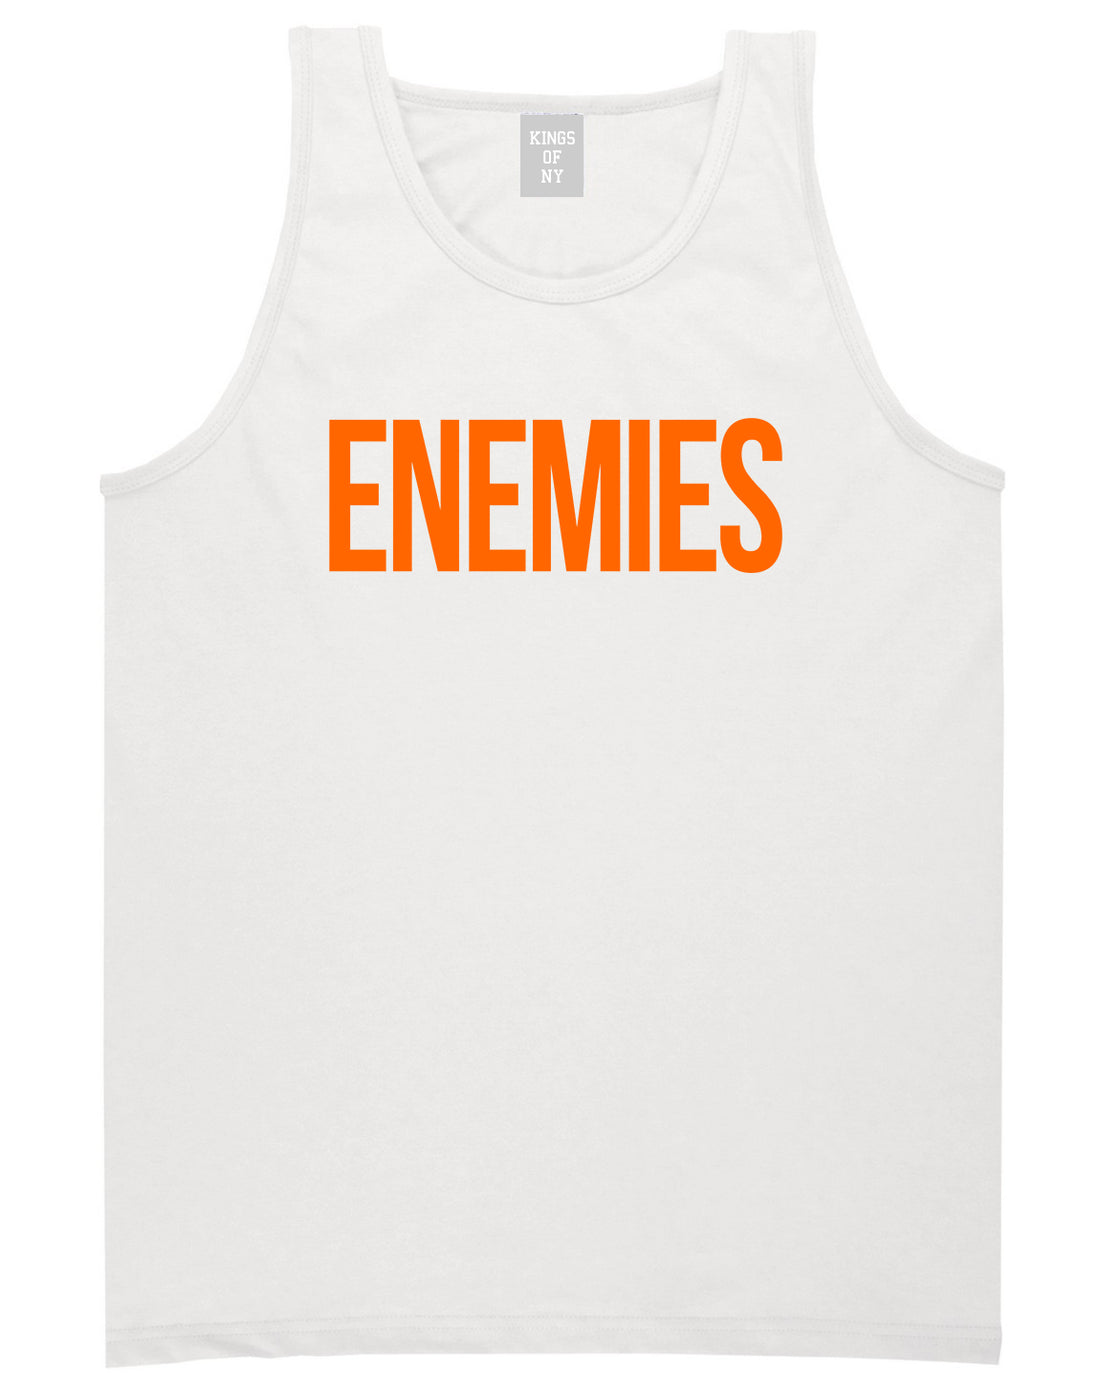 ENEMIES Orange Print T-Shirt in White